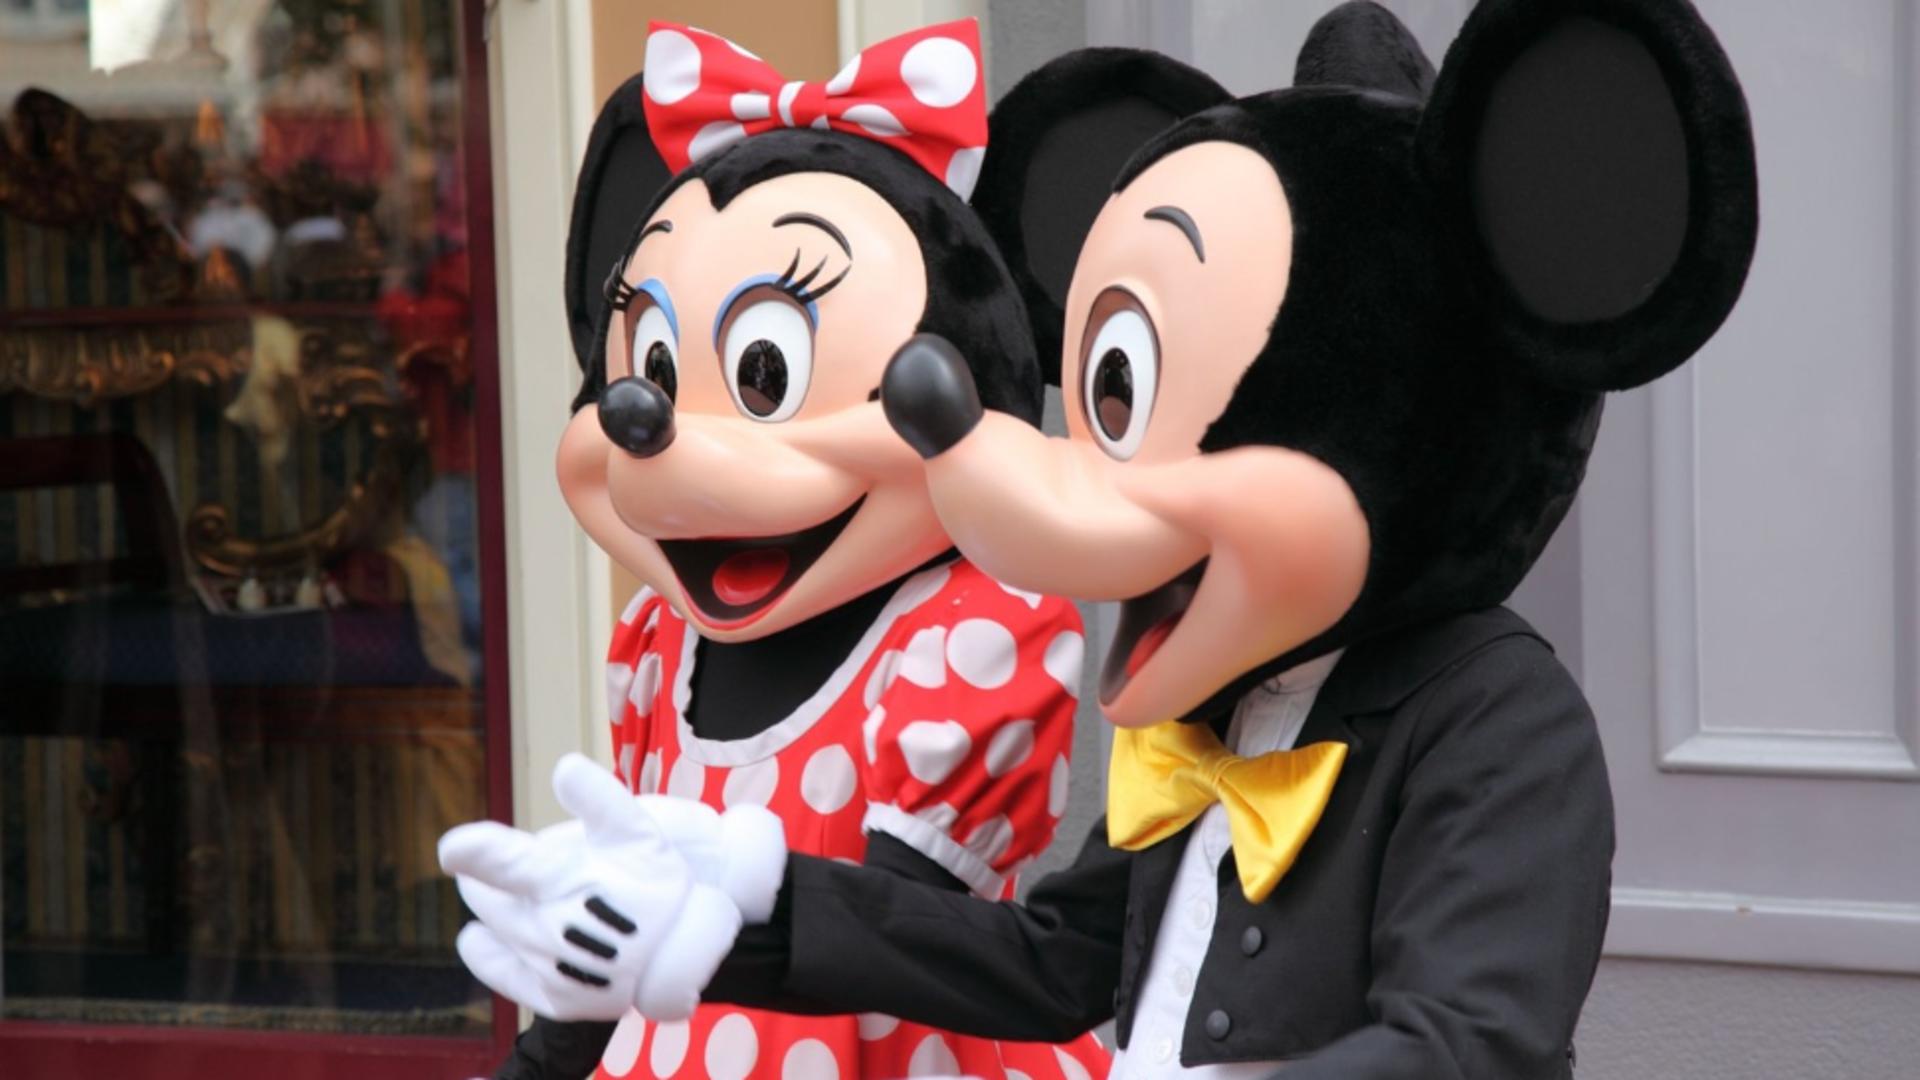 Român costumat în Mickey Mouse, prins la furat în Italia. Foto: Profimedia